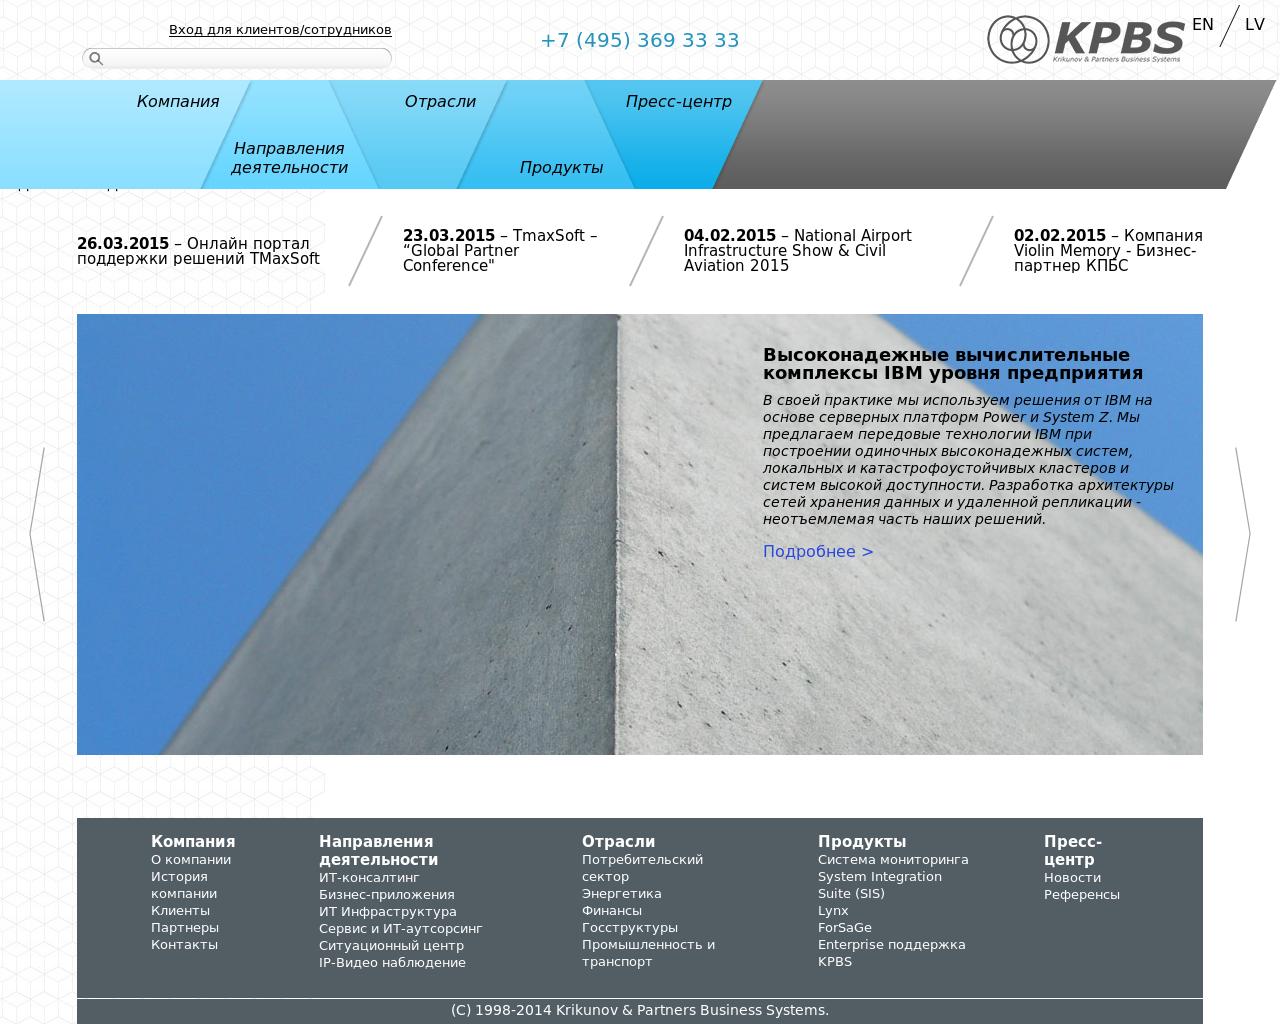 Изображение сайта kpbs.ru в разрешении 1280x1024